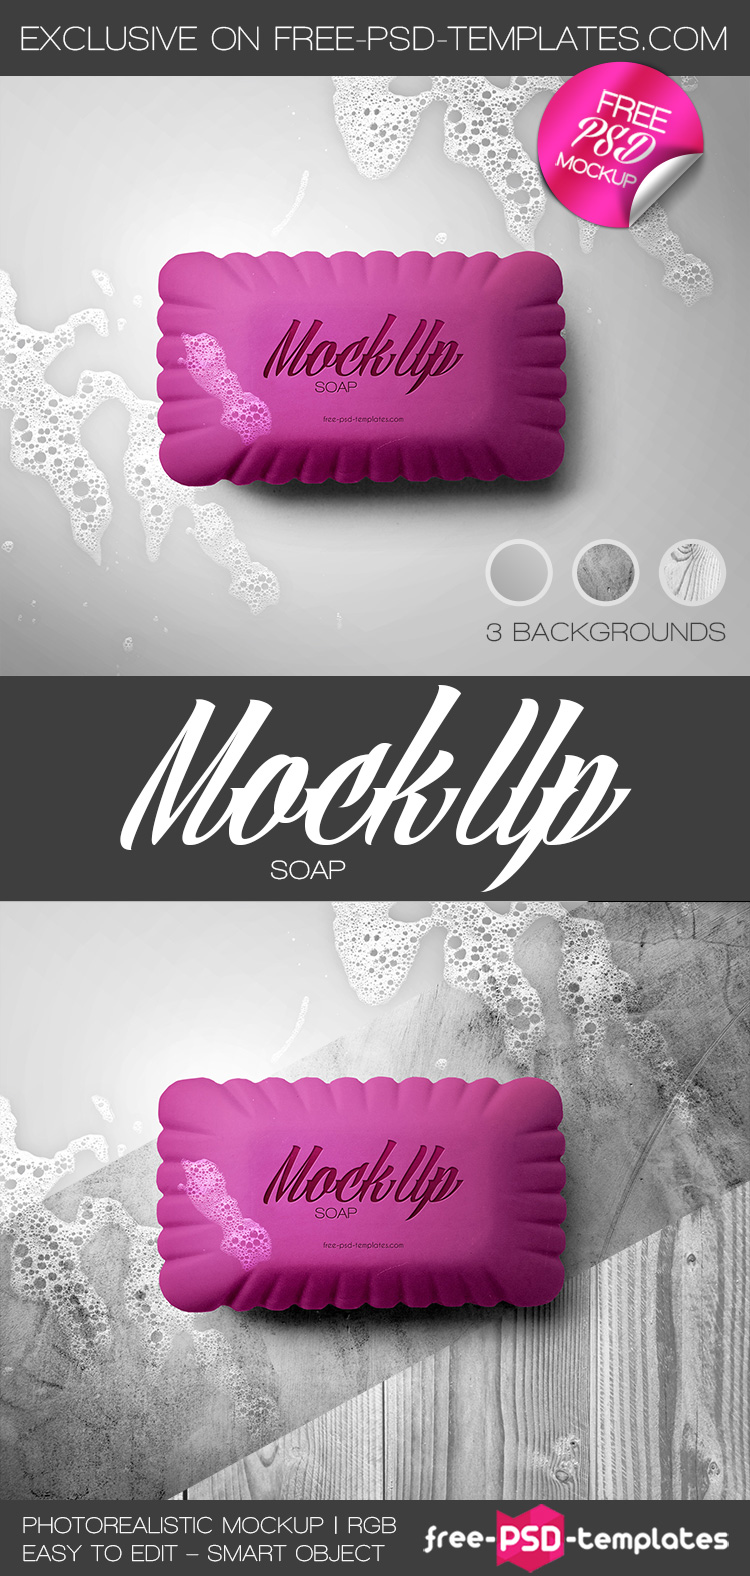 Download Free Soap Mockup For Designers - LTHEME